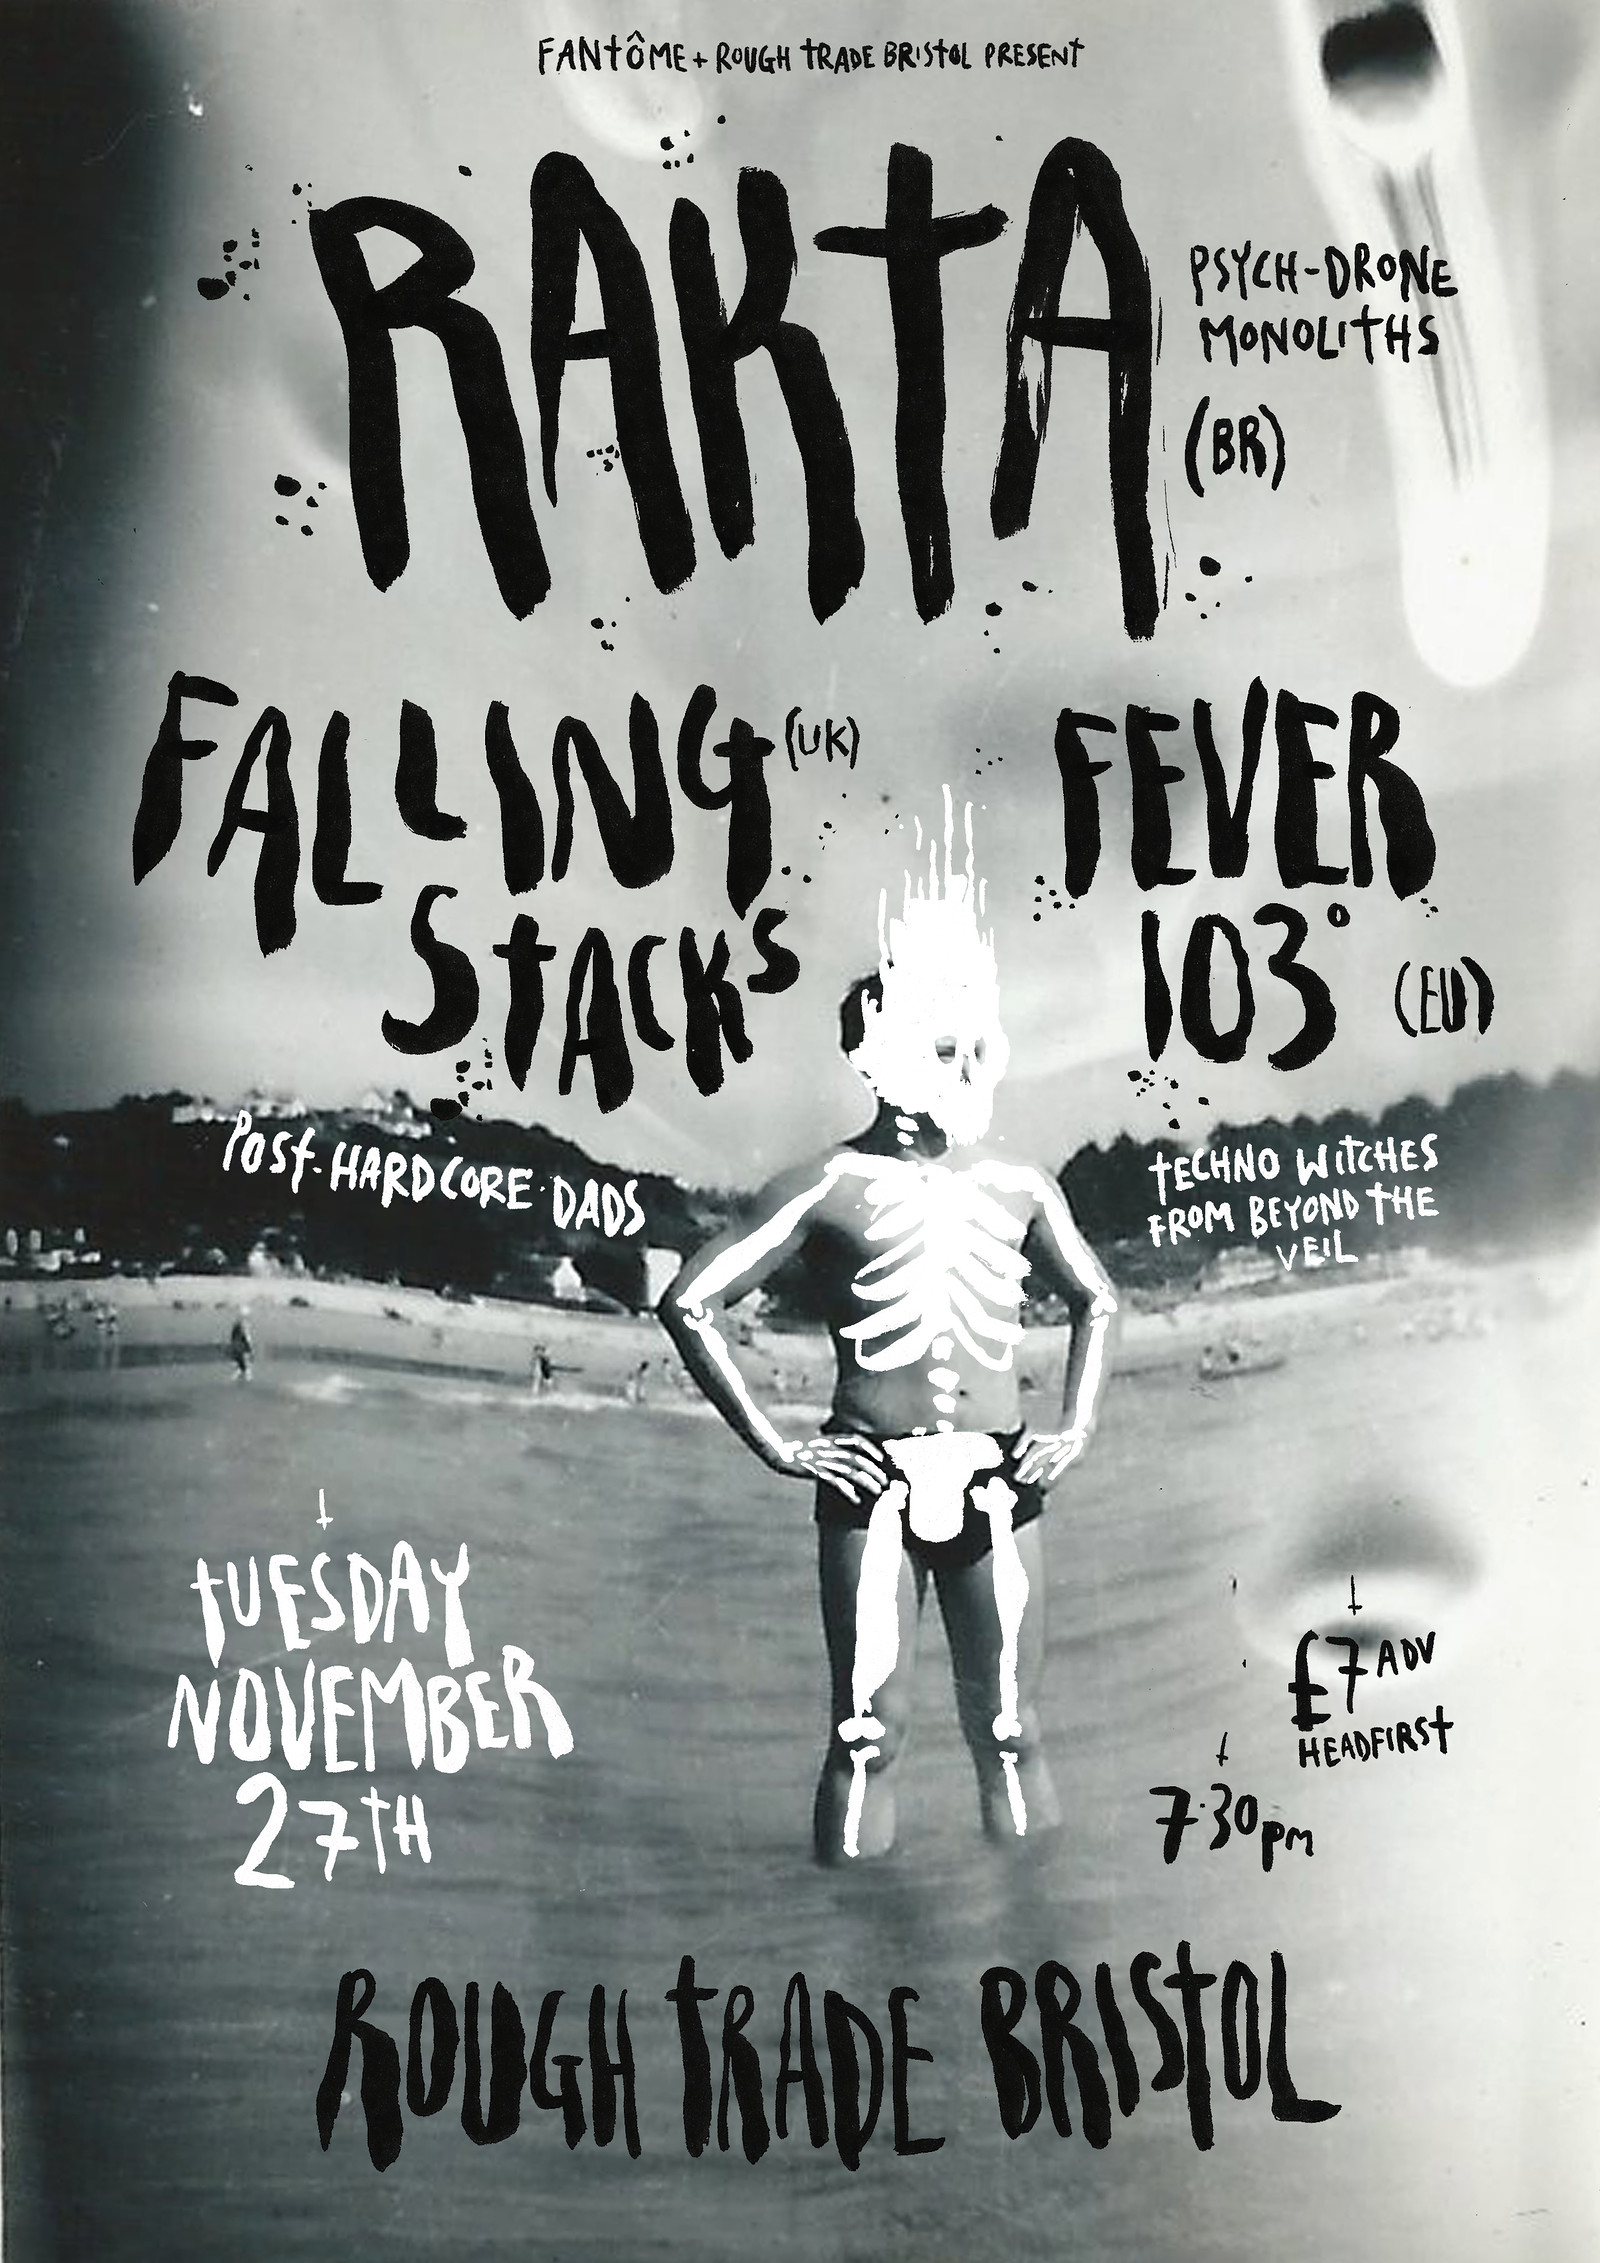 Rakta / Falling Stacks / Fever 103 at Rough Trade Bristol